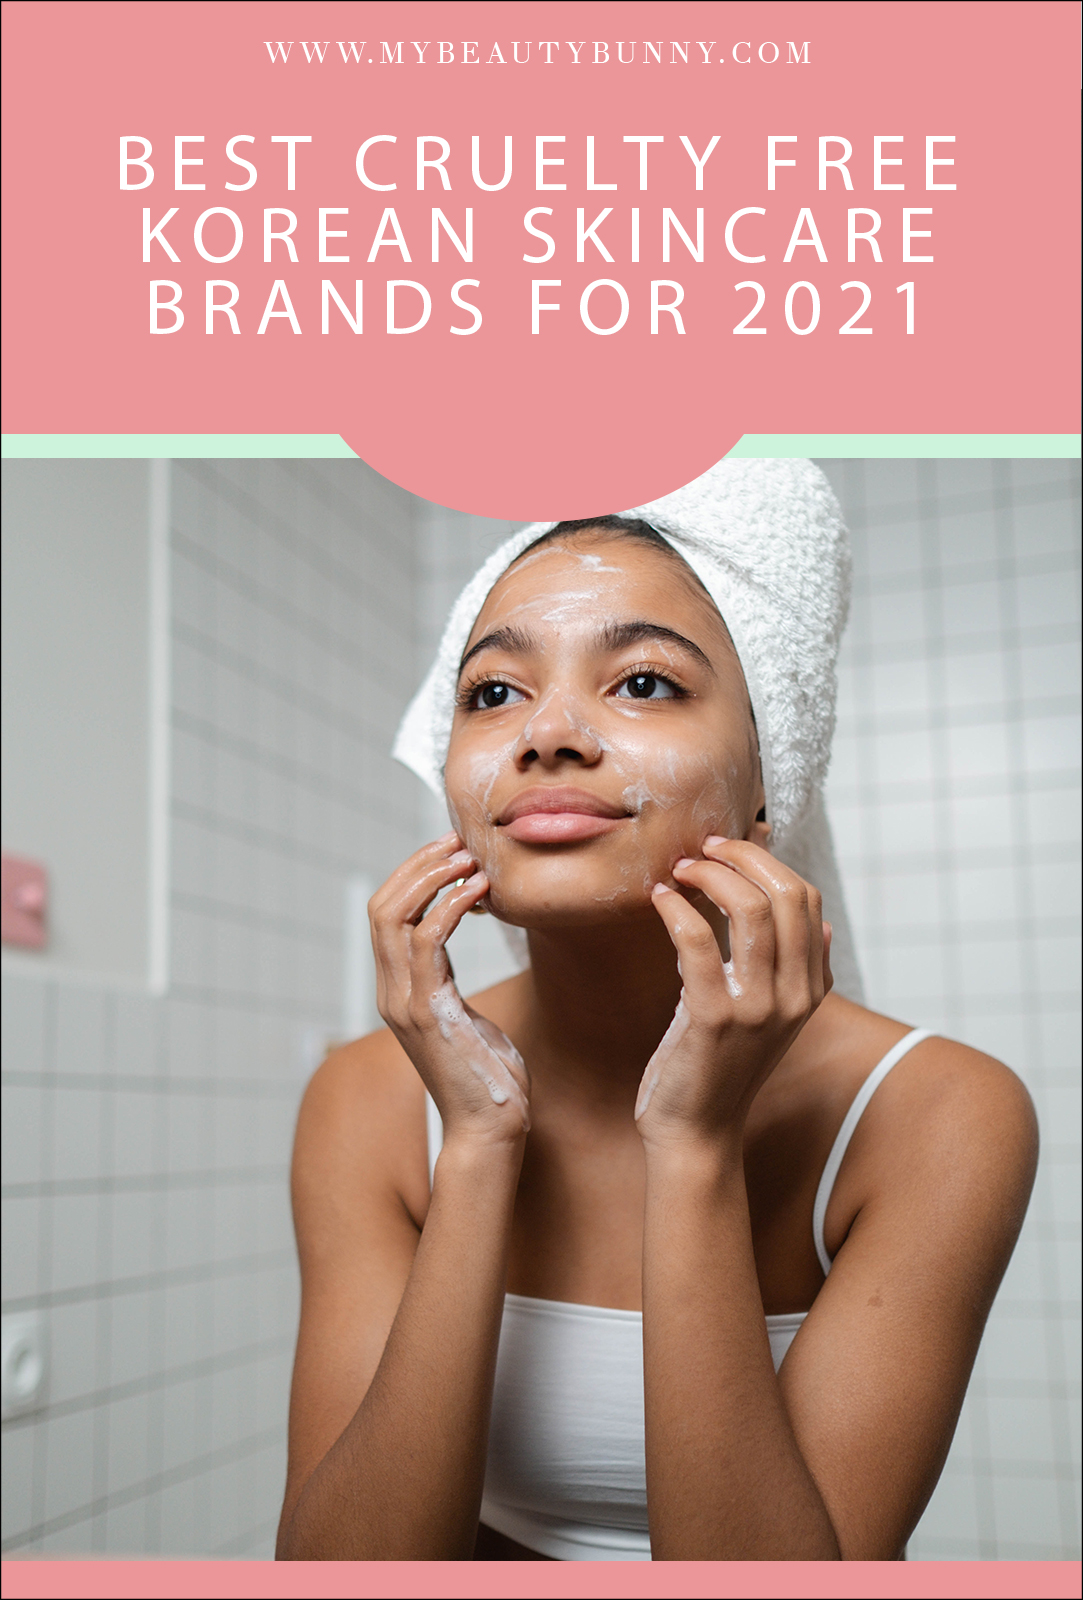 The Best Cruelty Free Korean Skincare Brands For 2021